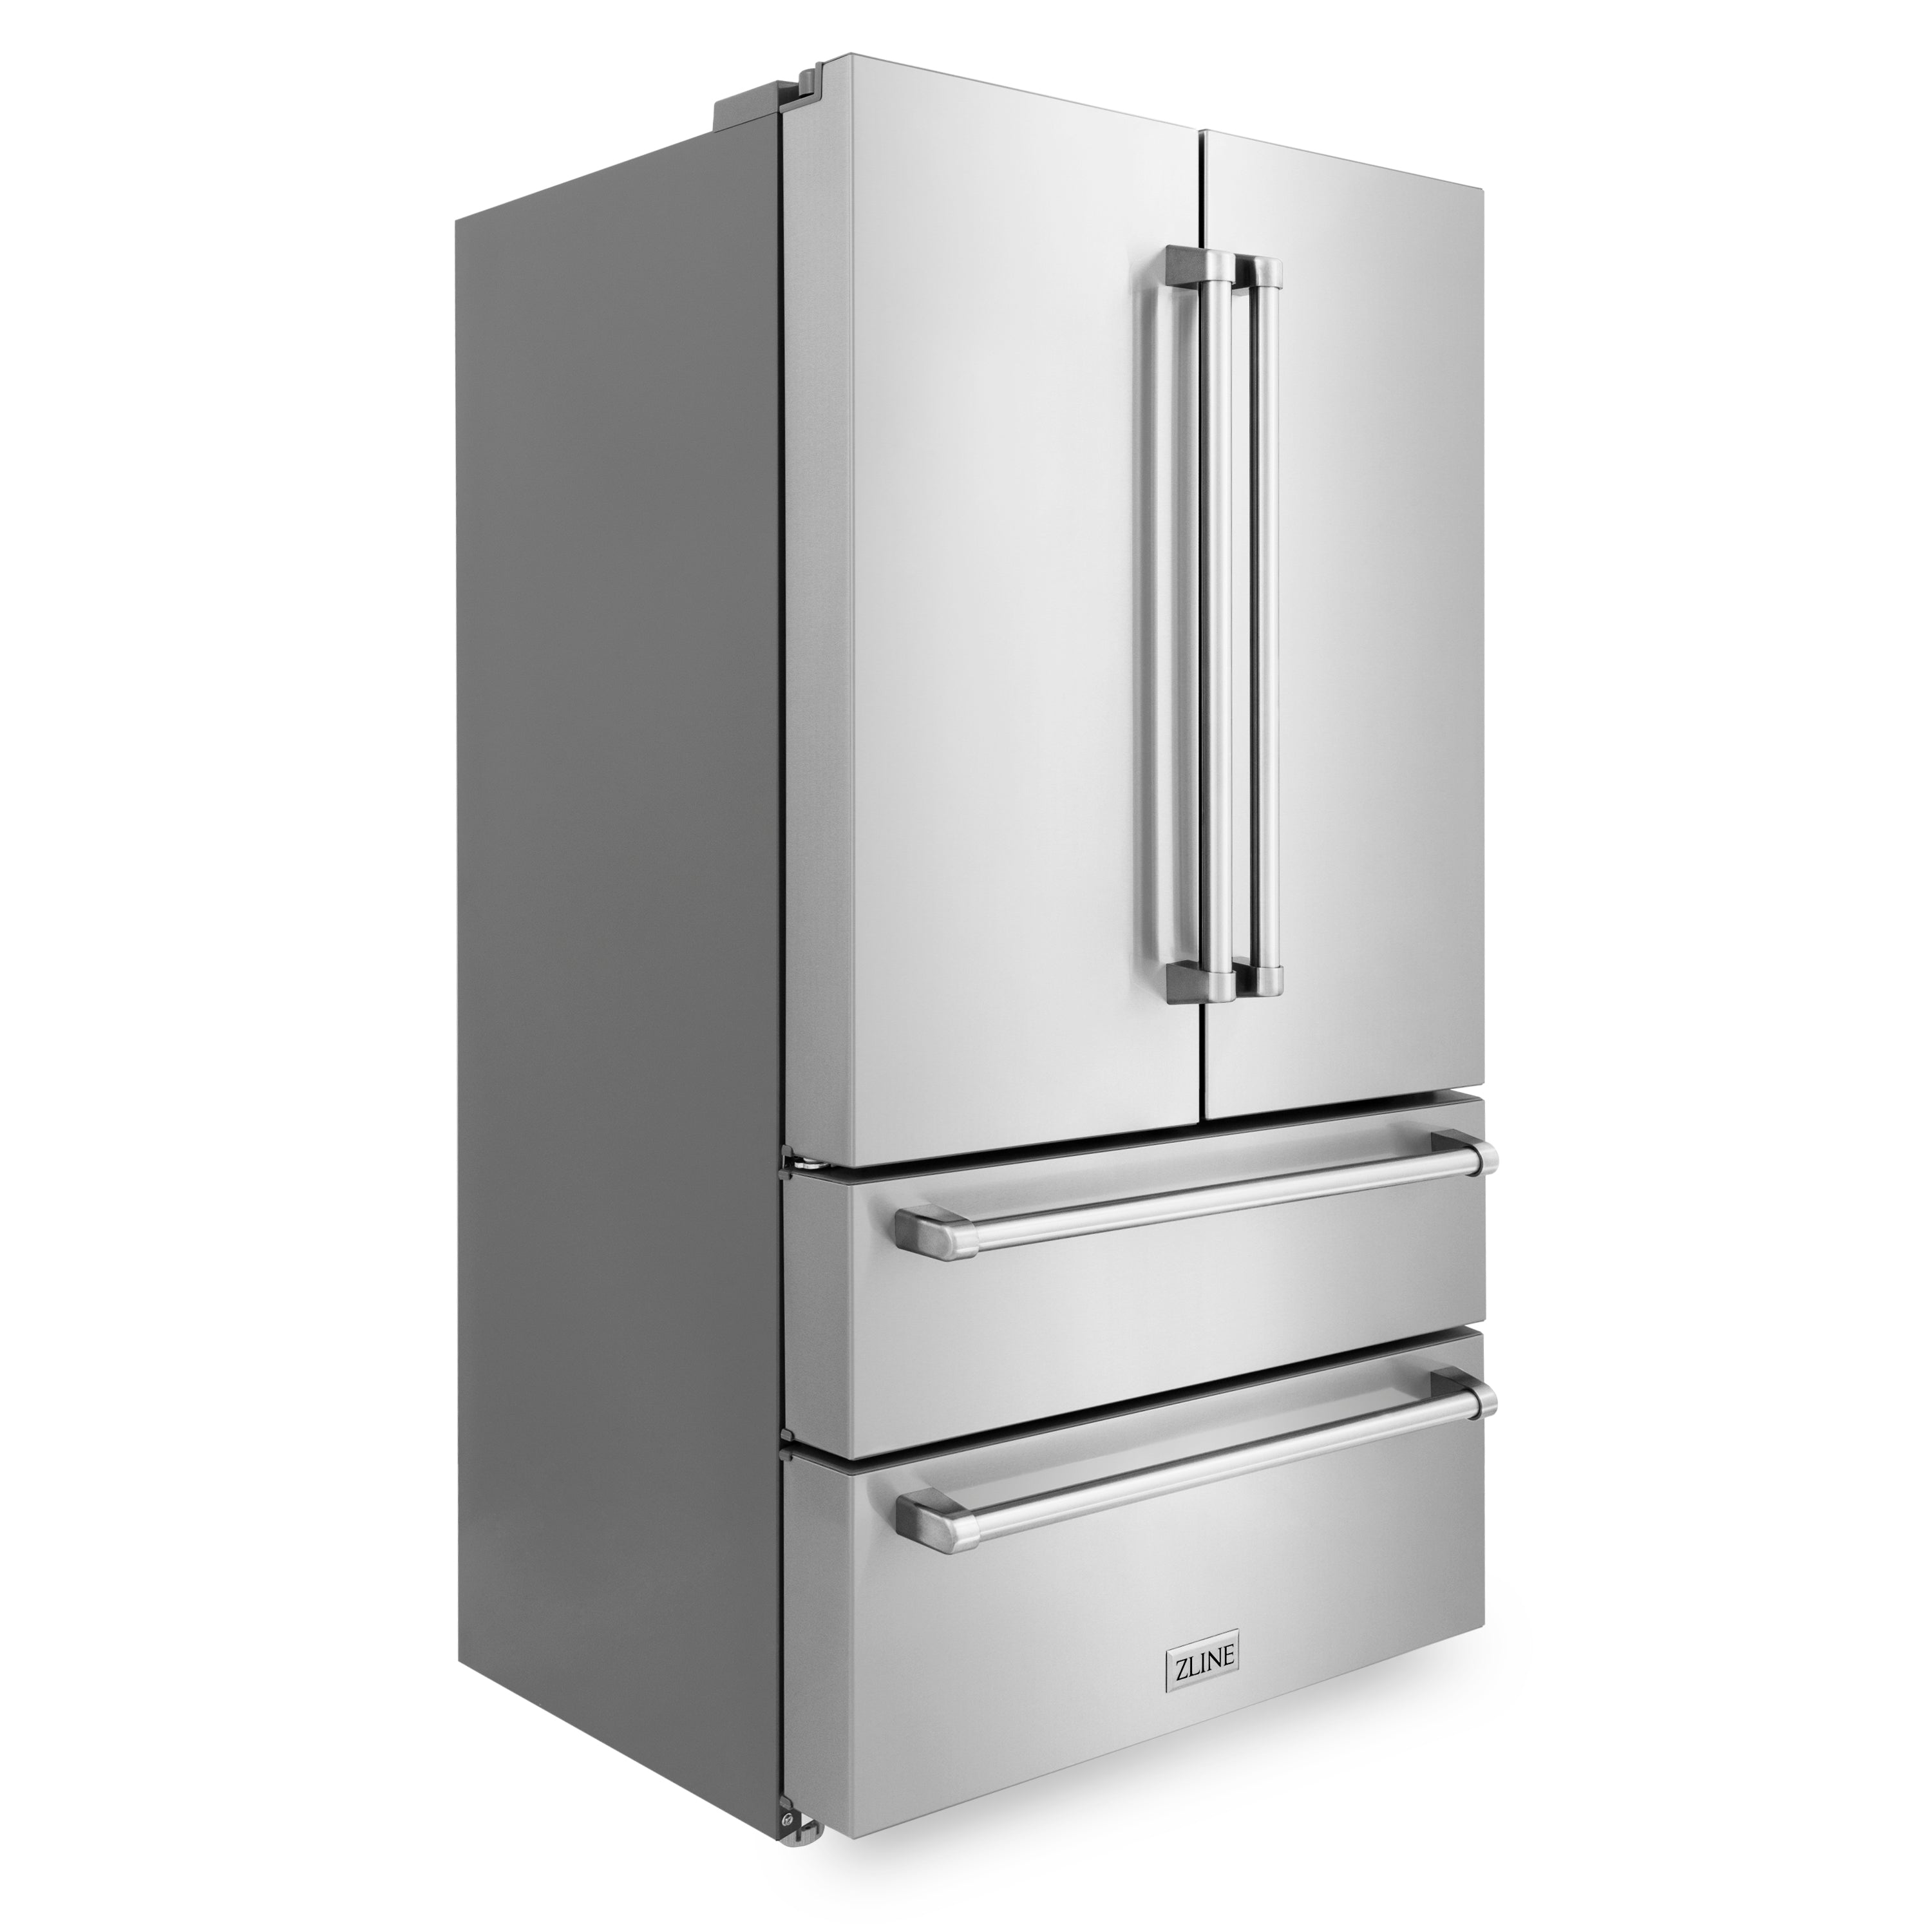 ZLINE 36 in. 22.5 cu. ft Built-in French Door Refrigerator with Ice Maker in Fingerprint Resistant Stainless Steel